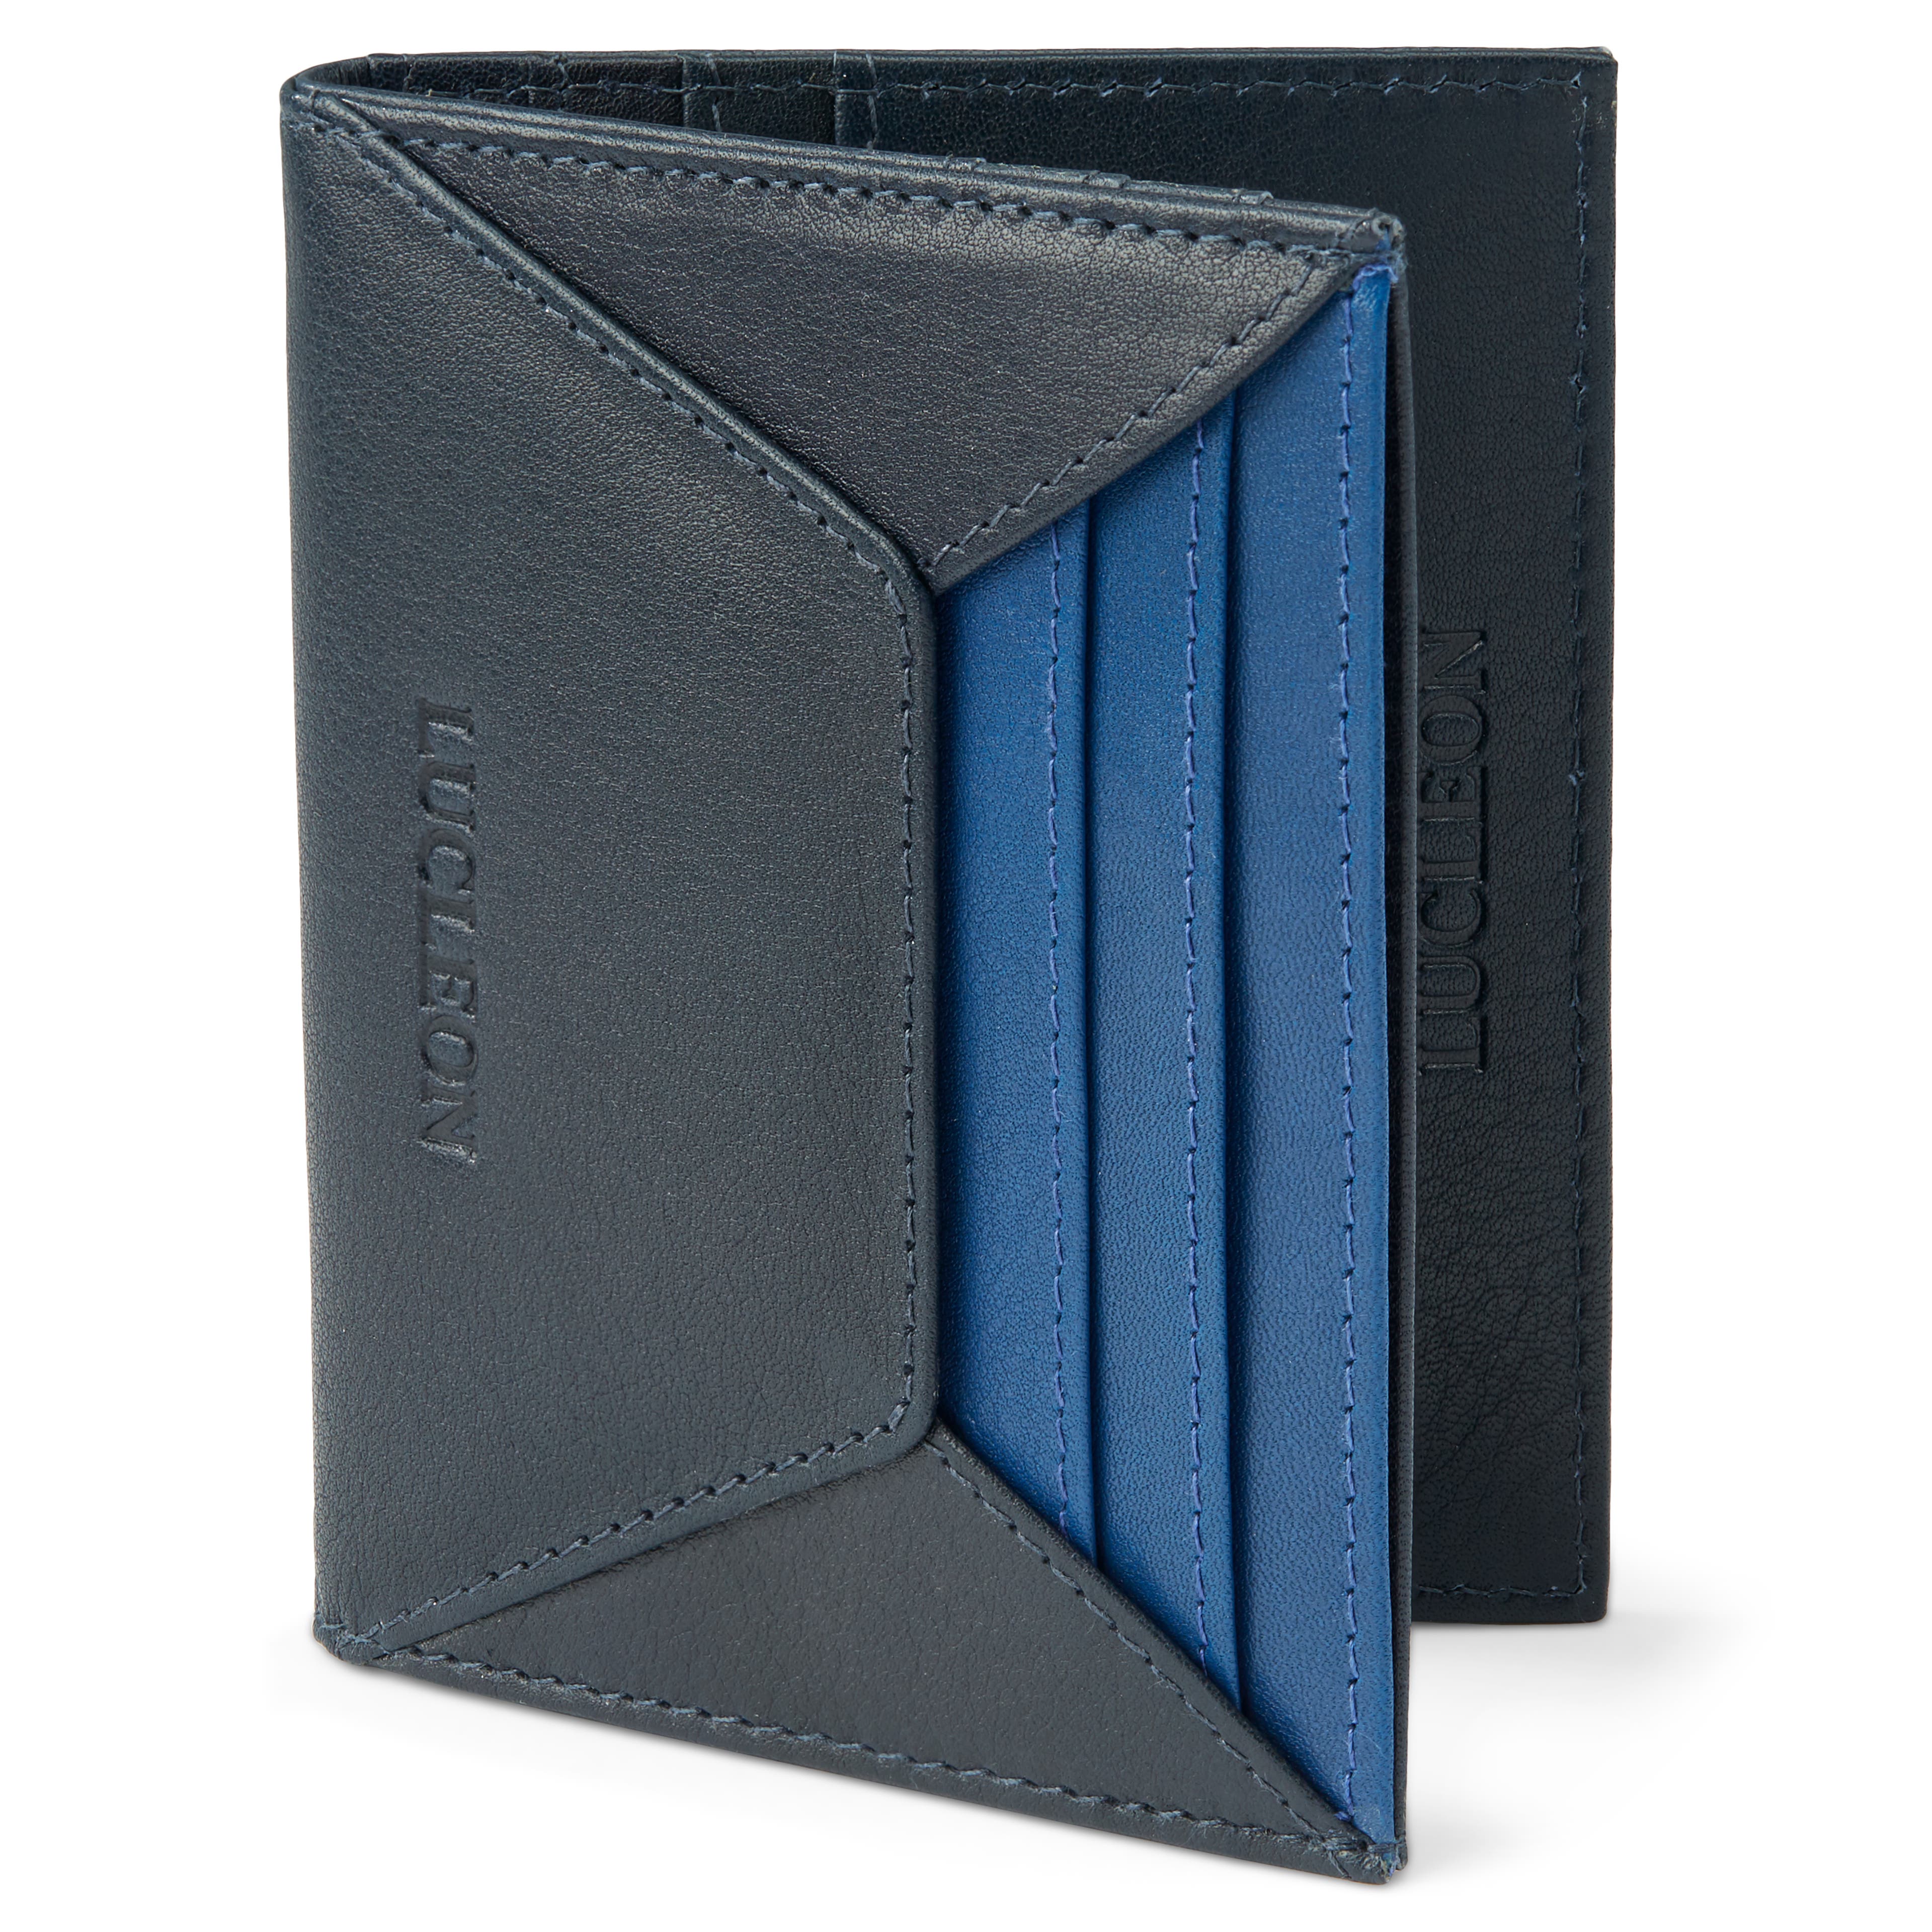 Loren černo-modré kožené pouzdro na karty s RFID blokací